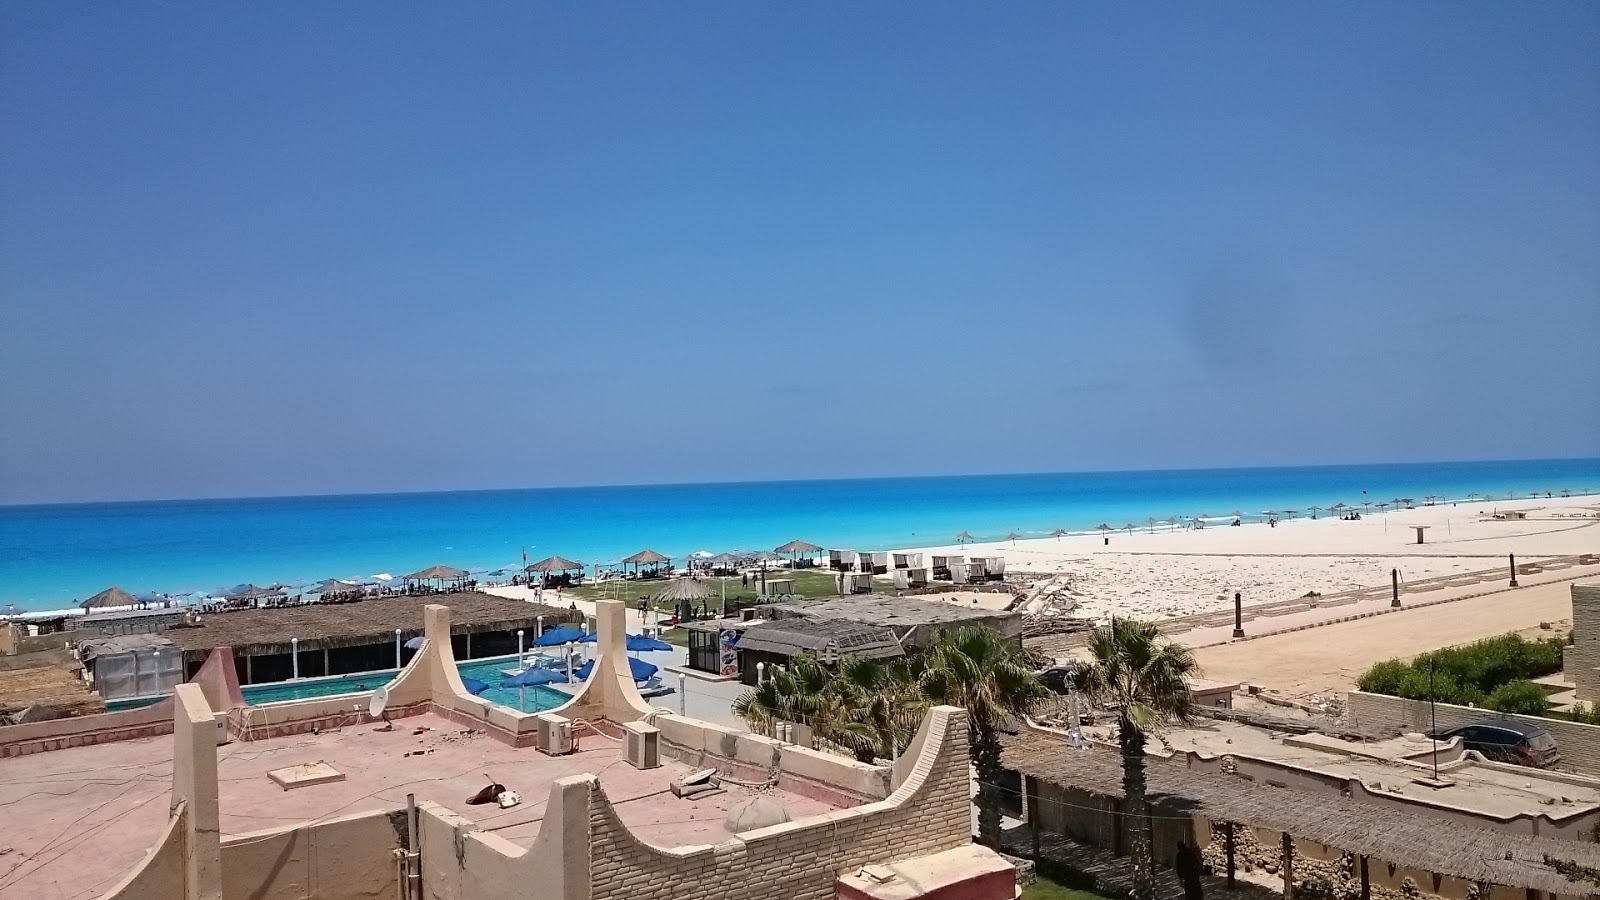 Fotografija Aida Beach z turkizna čista voda površino